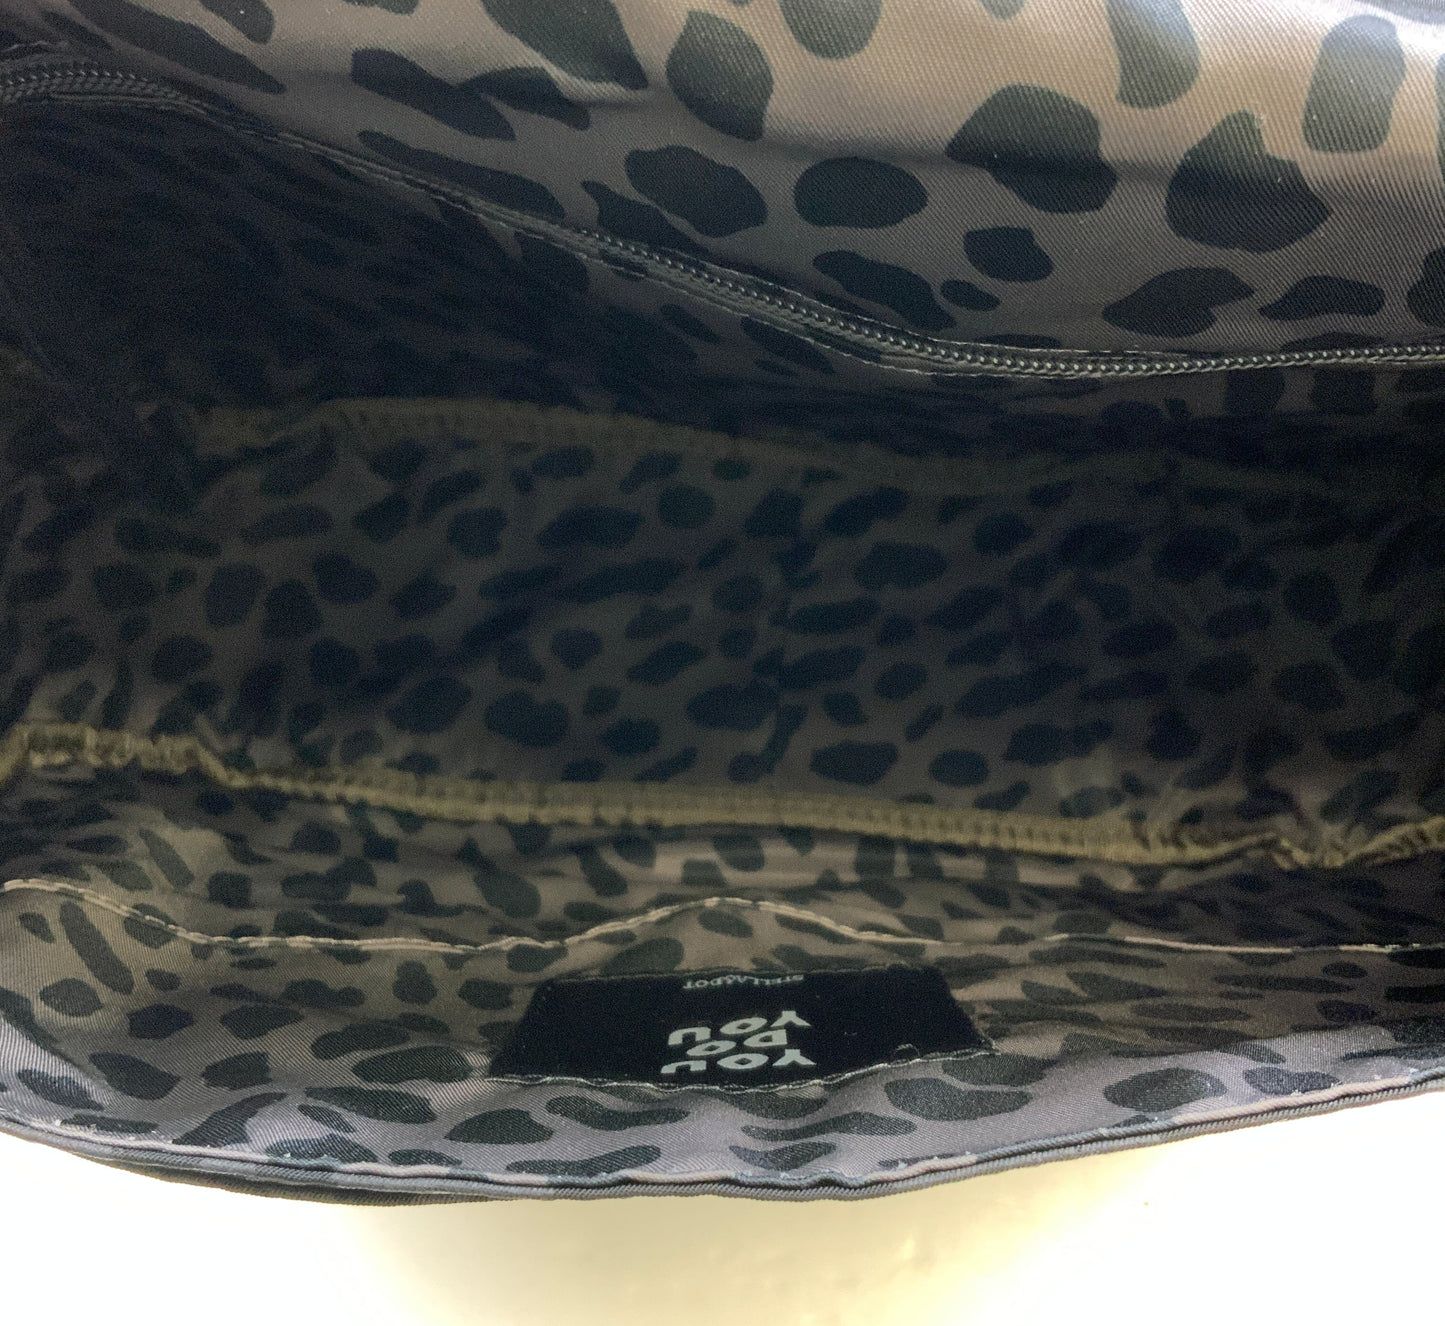 Handbag By Stella And Dot  Size: Large